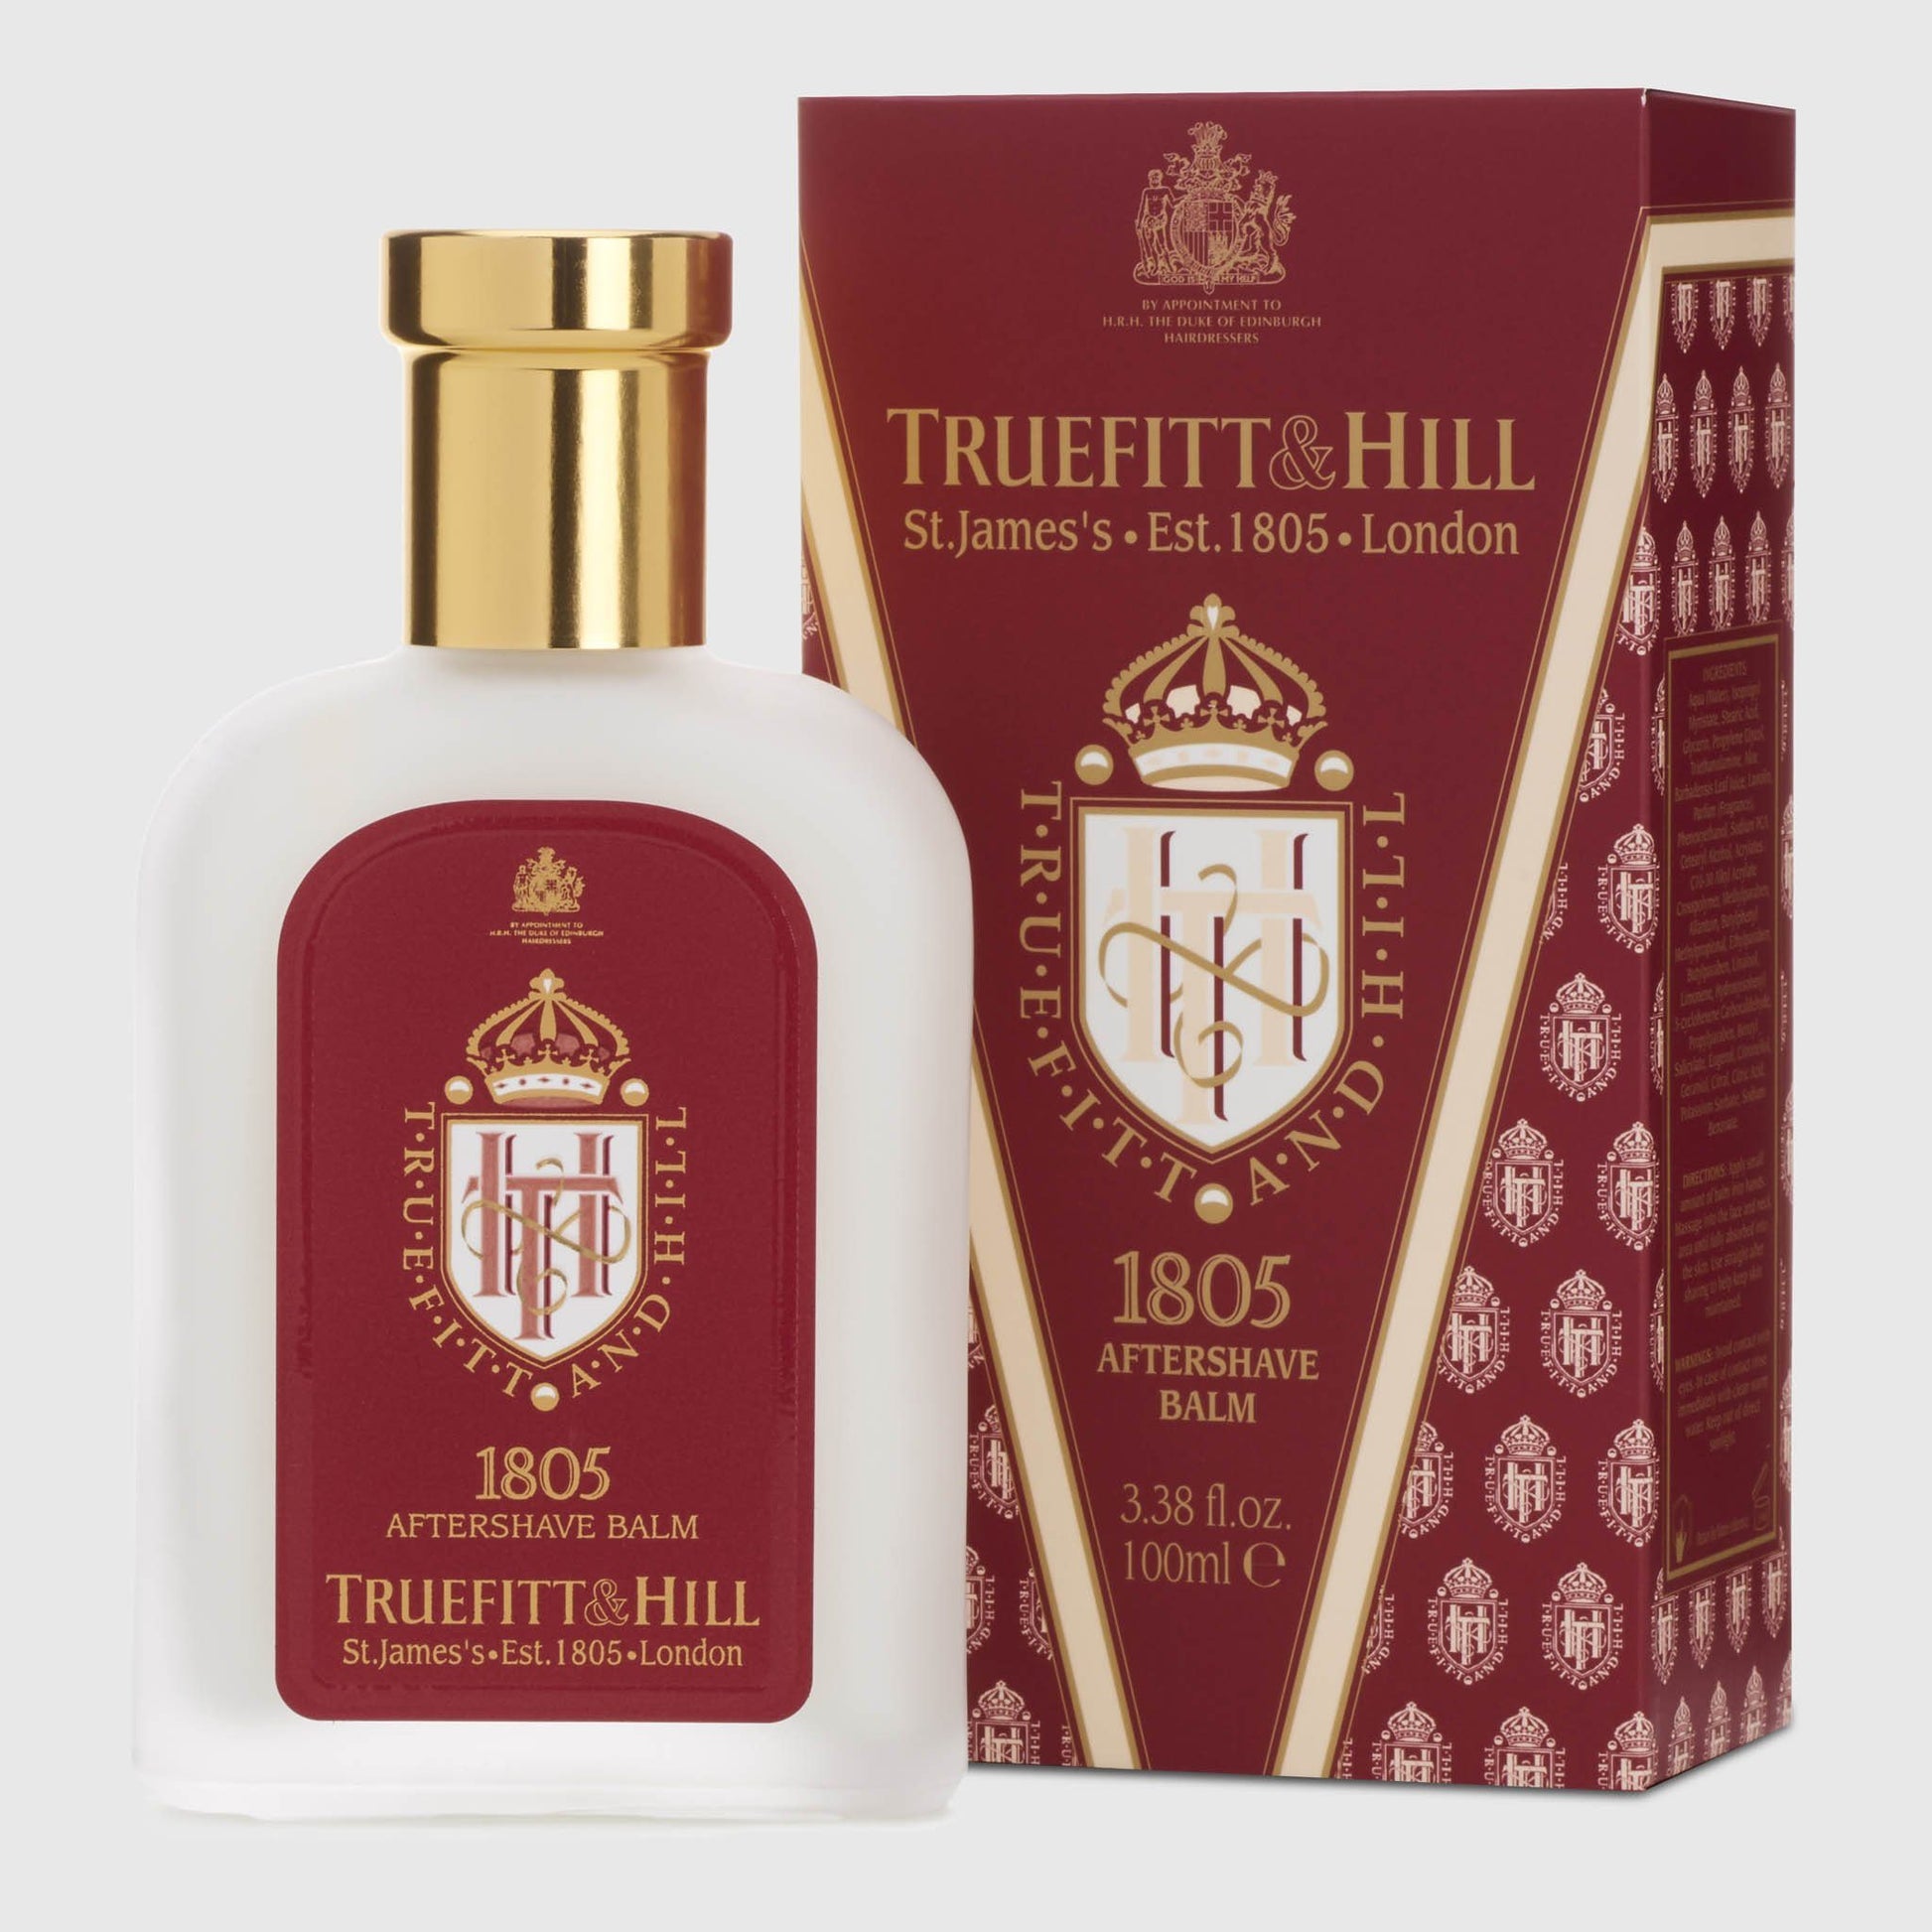 Truefitt & Hill Aftershave Balm - 1805 Shave Products Truefitt & Hill 